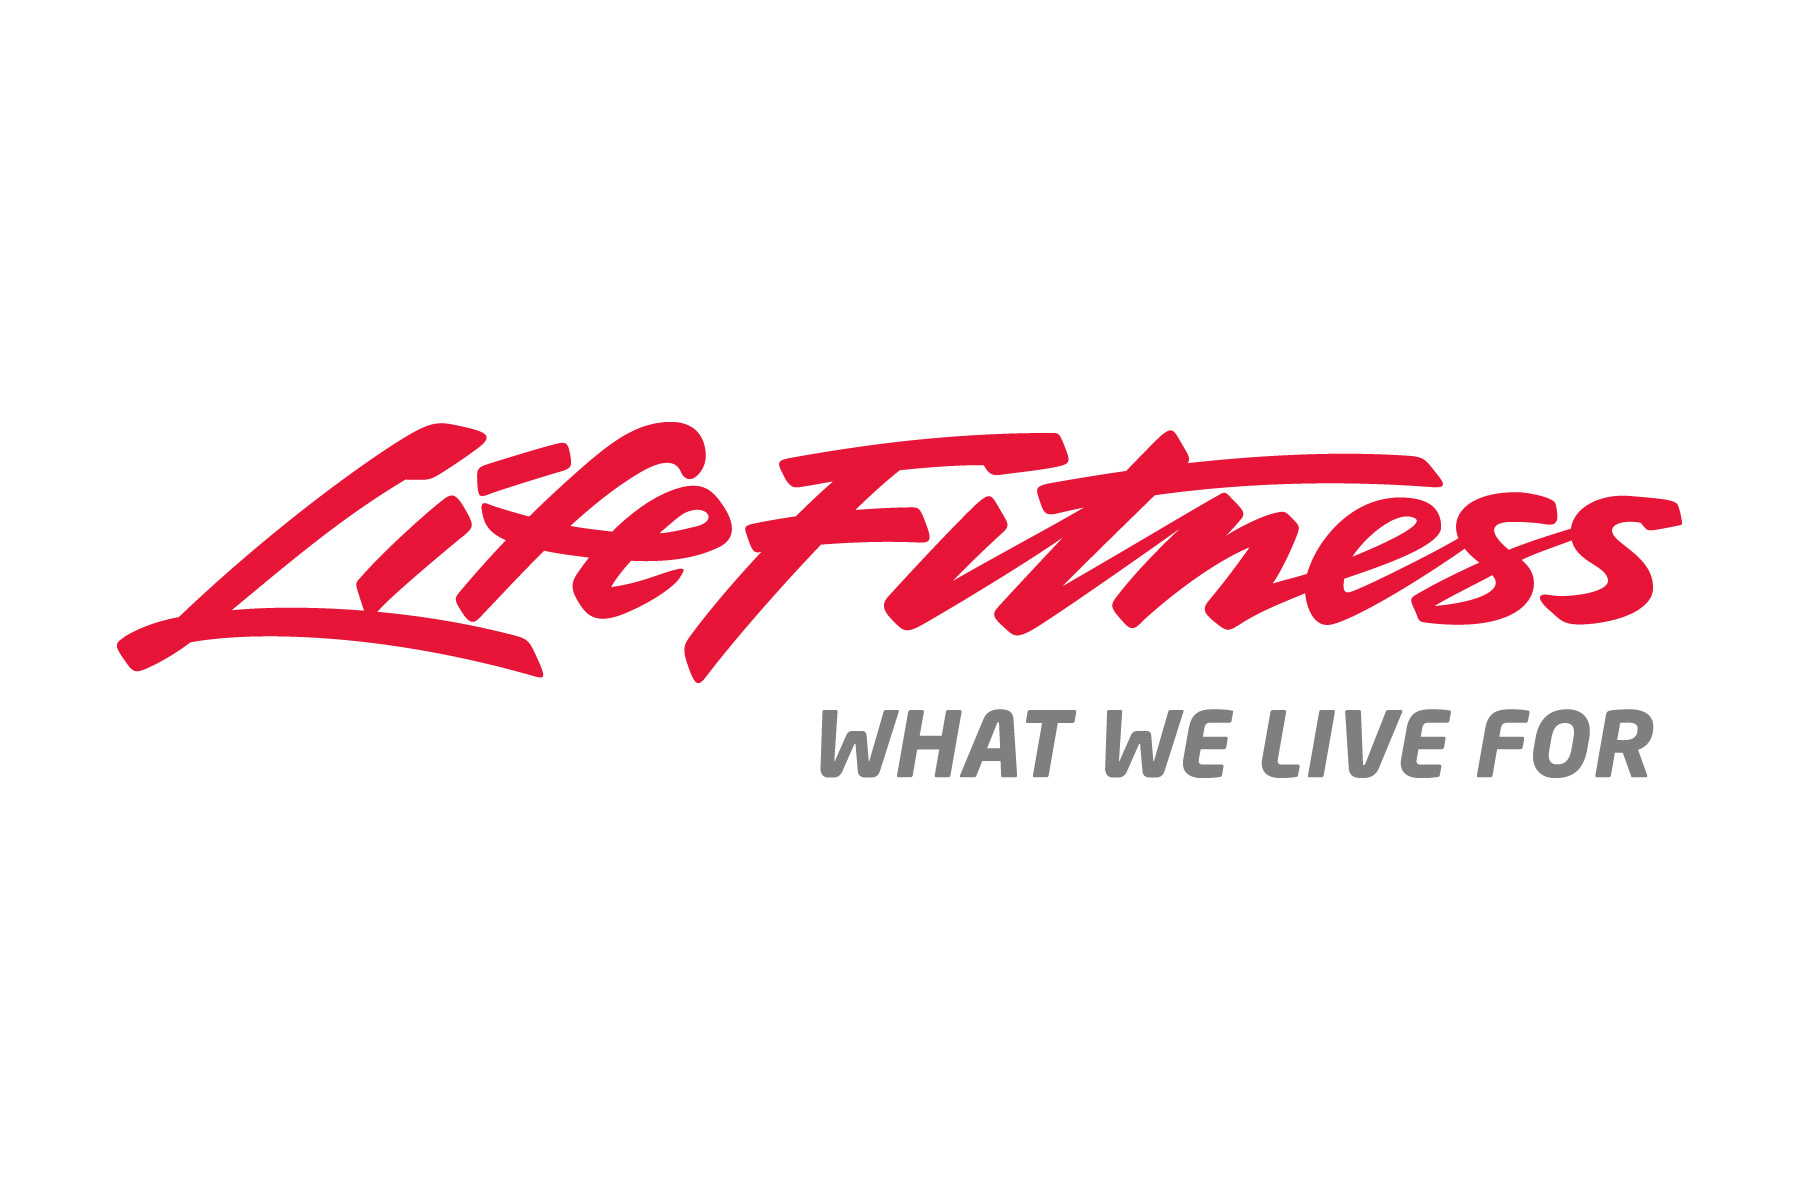 Lifetime Fitness Logos